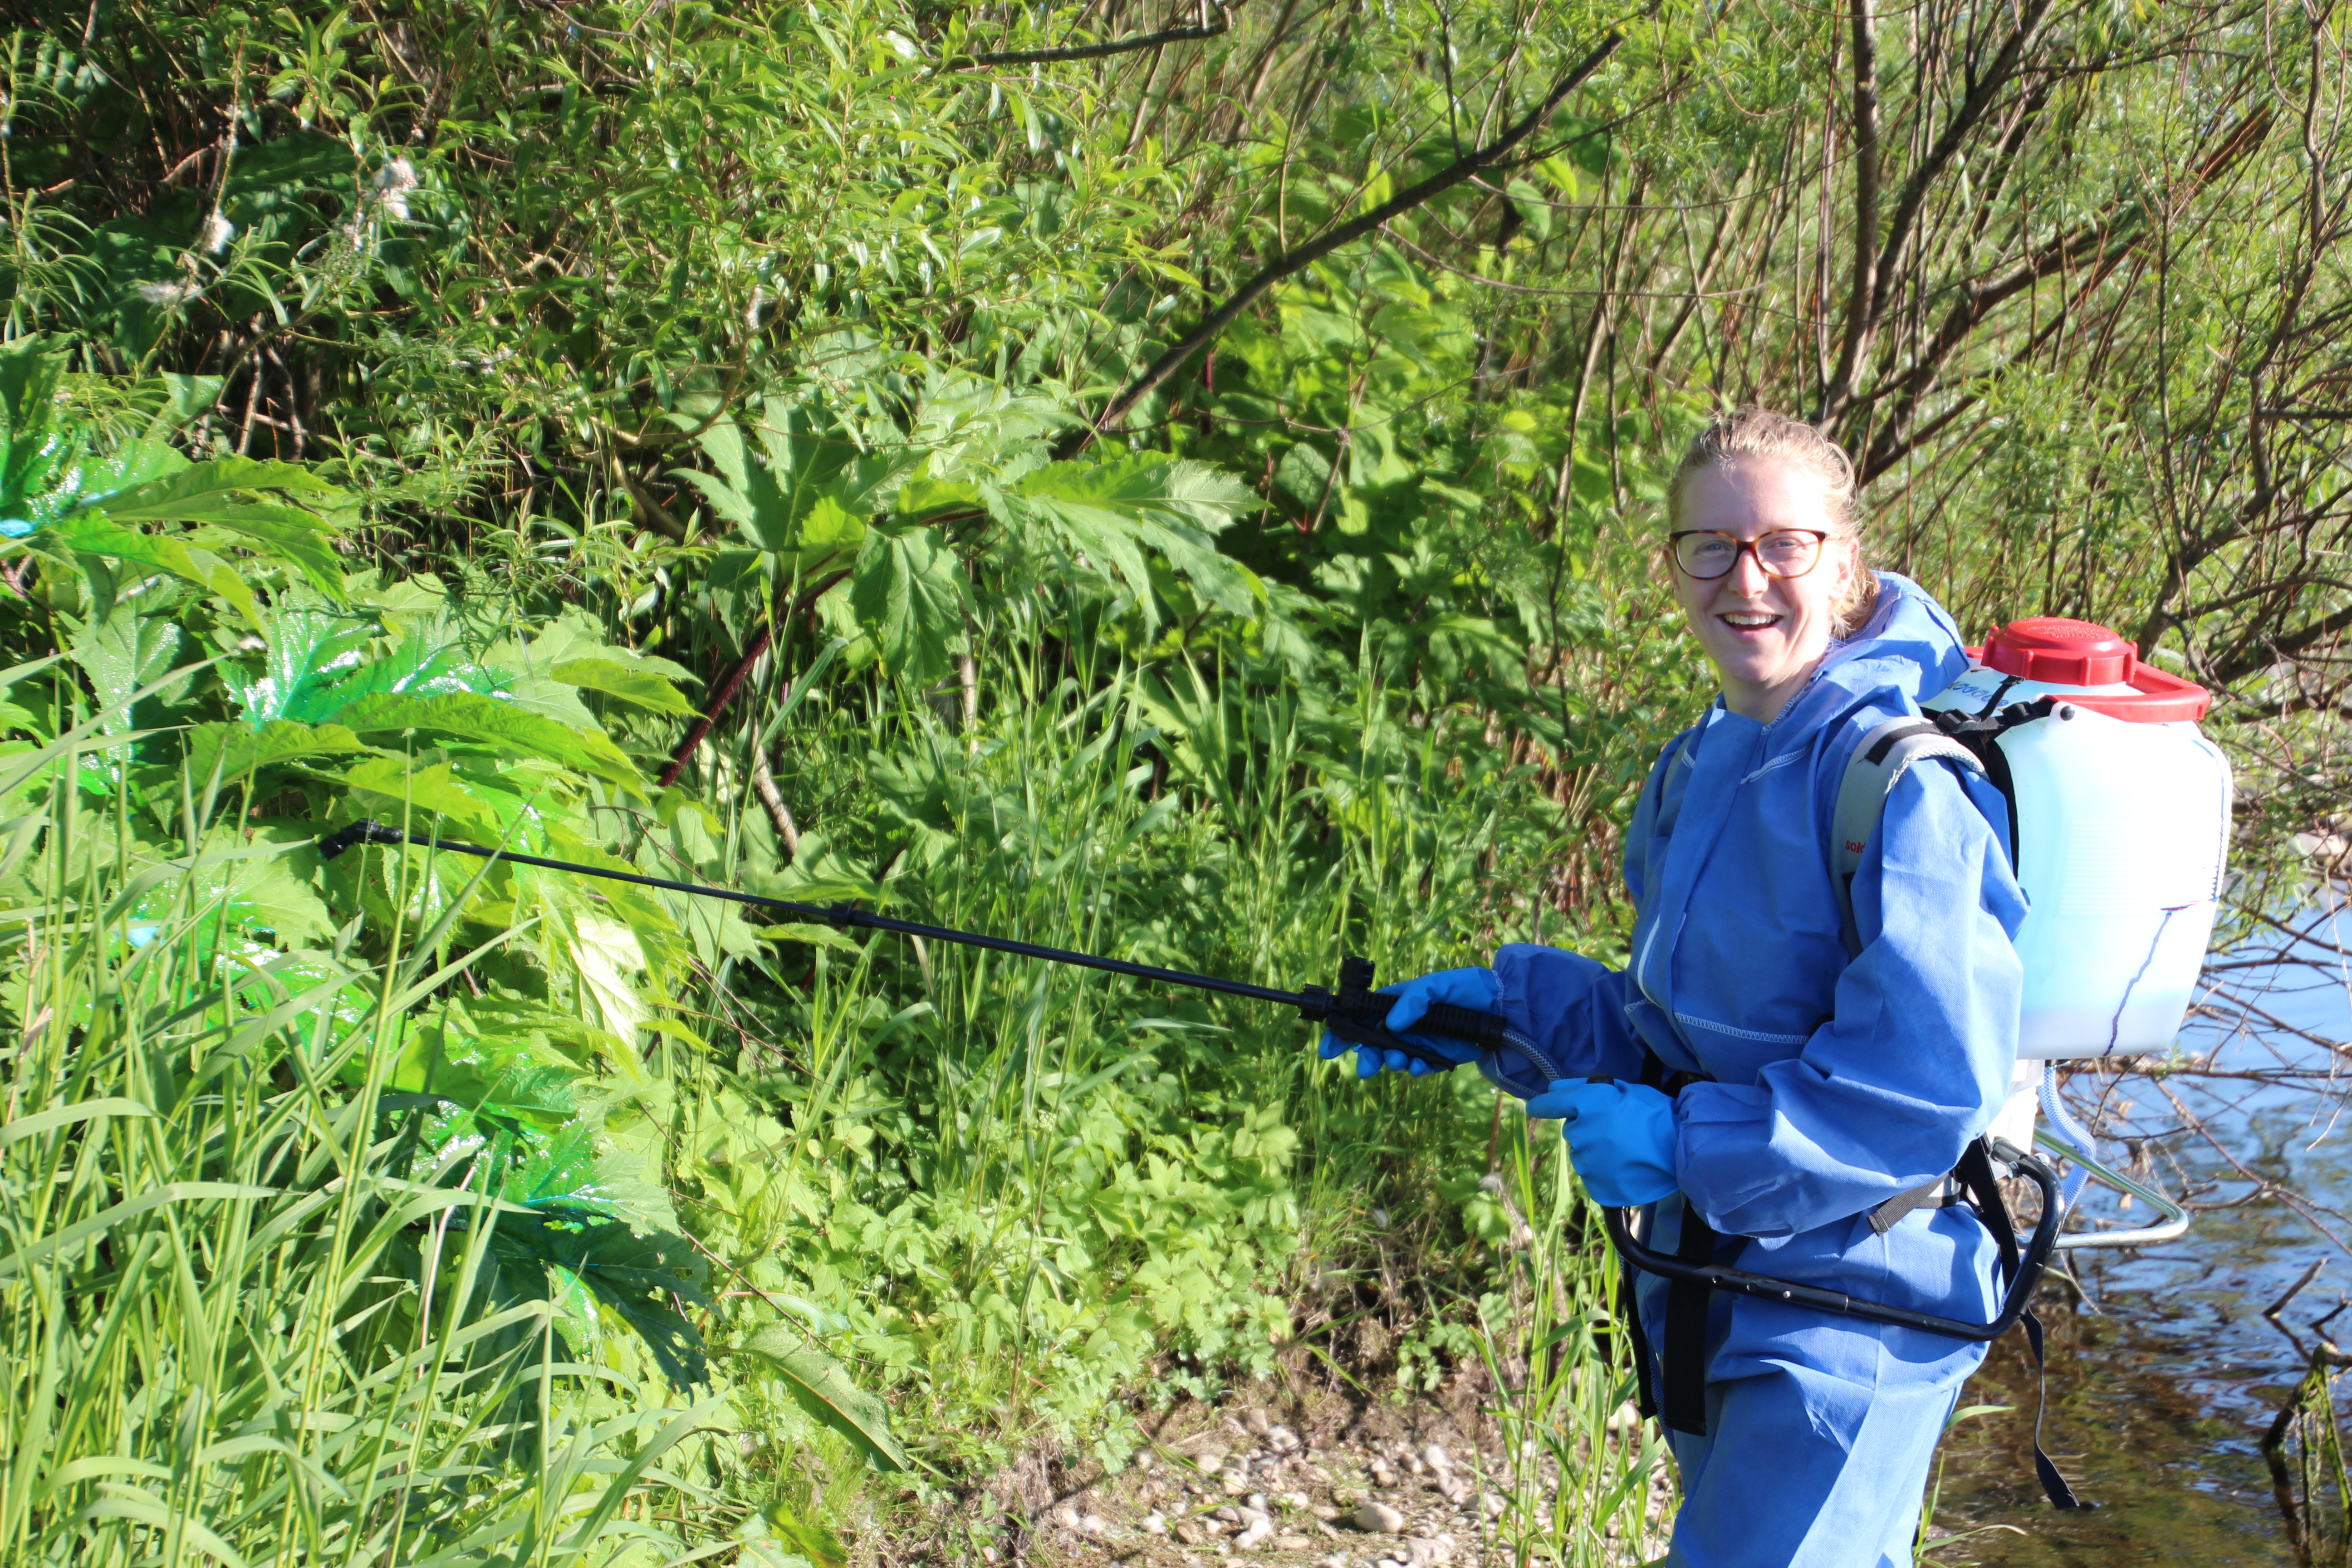 Volunteer spraying giant hogweed